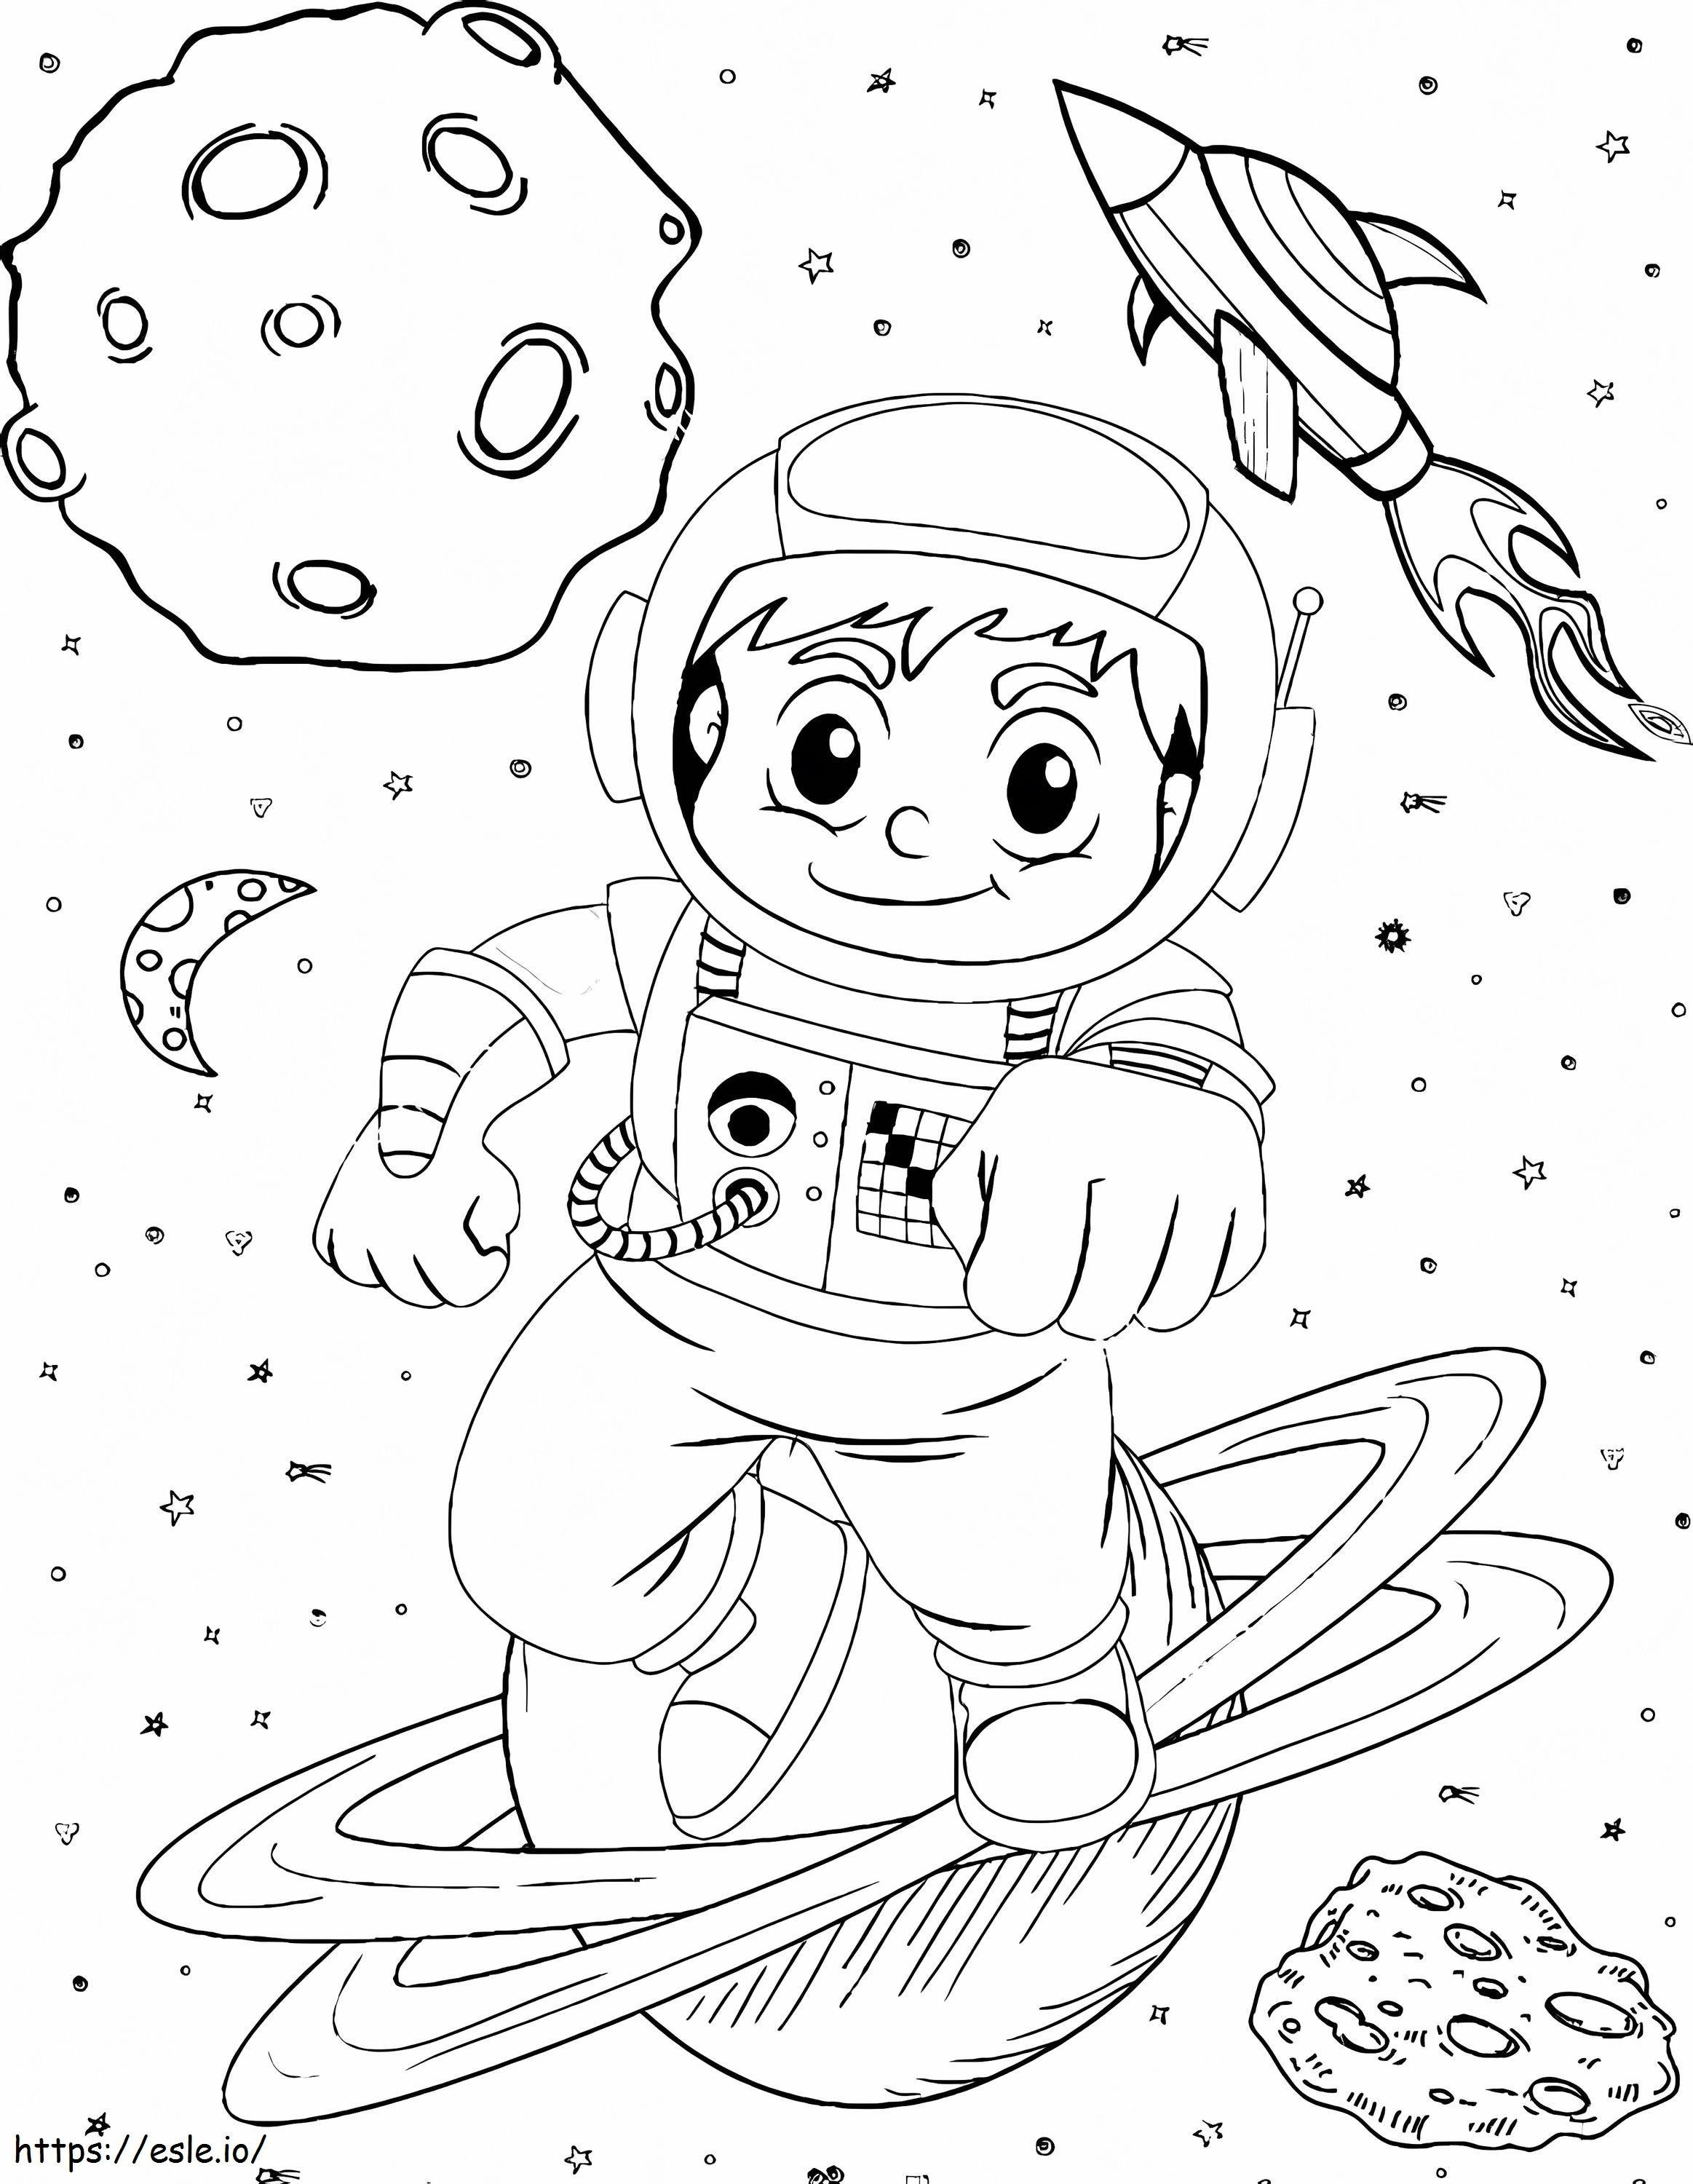 Dibujos animados de astronauta para colorear